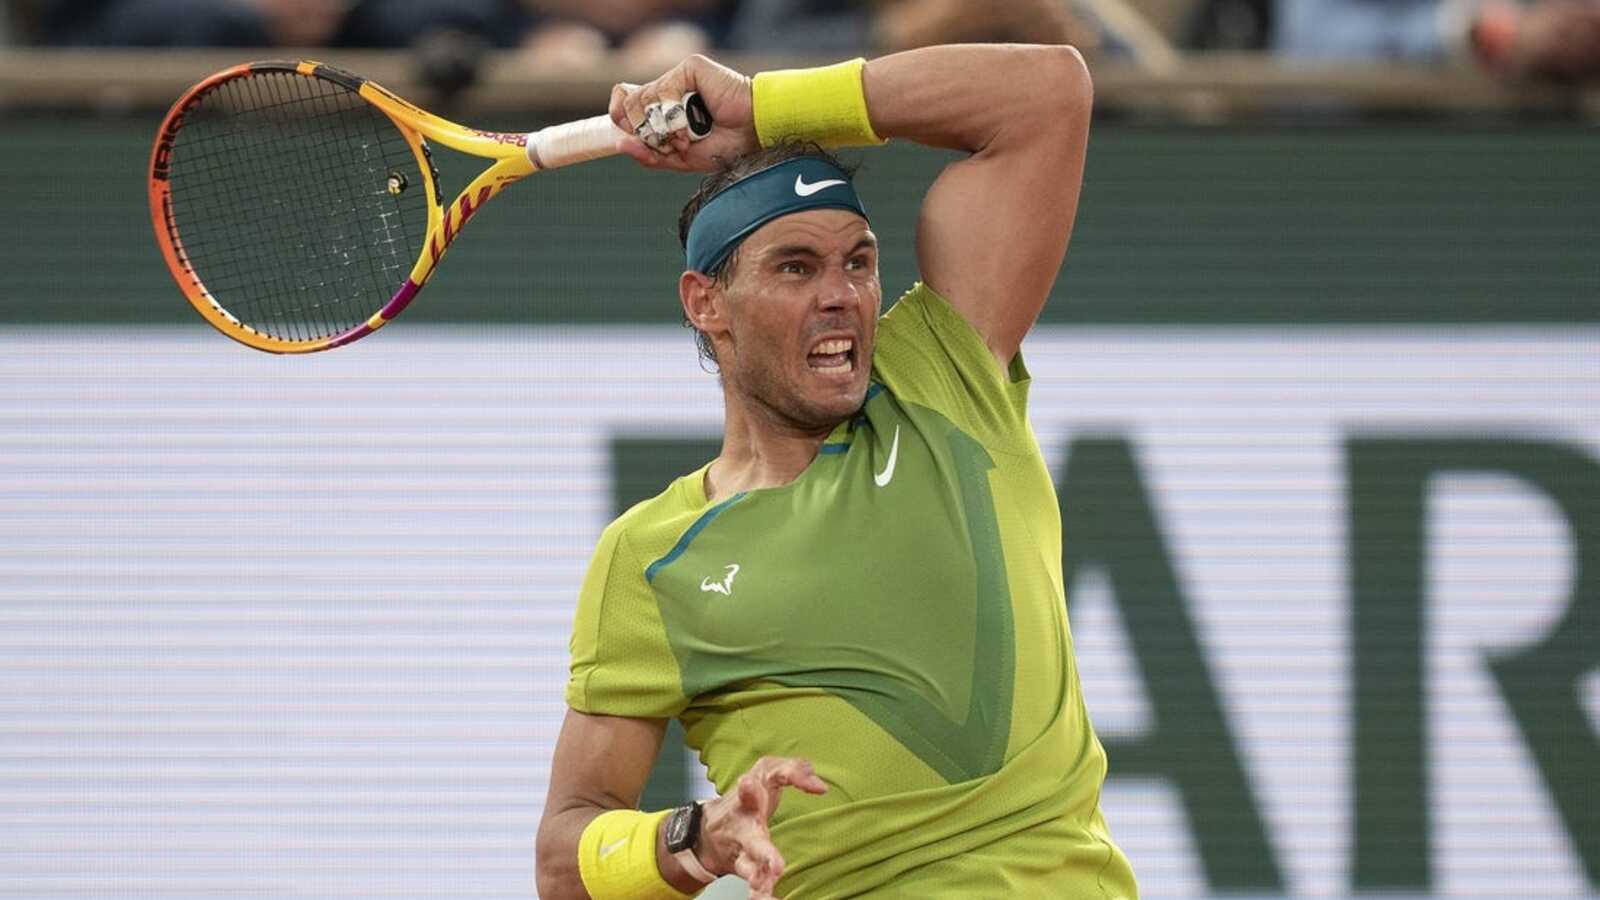 Rafael Nadal rallies to win opening match in Rome